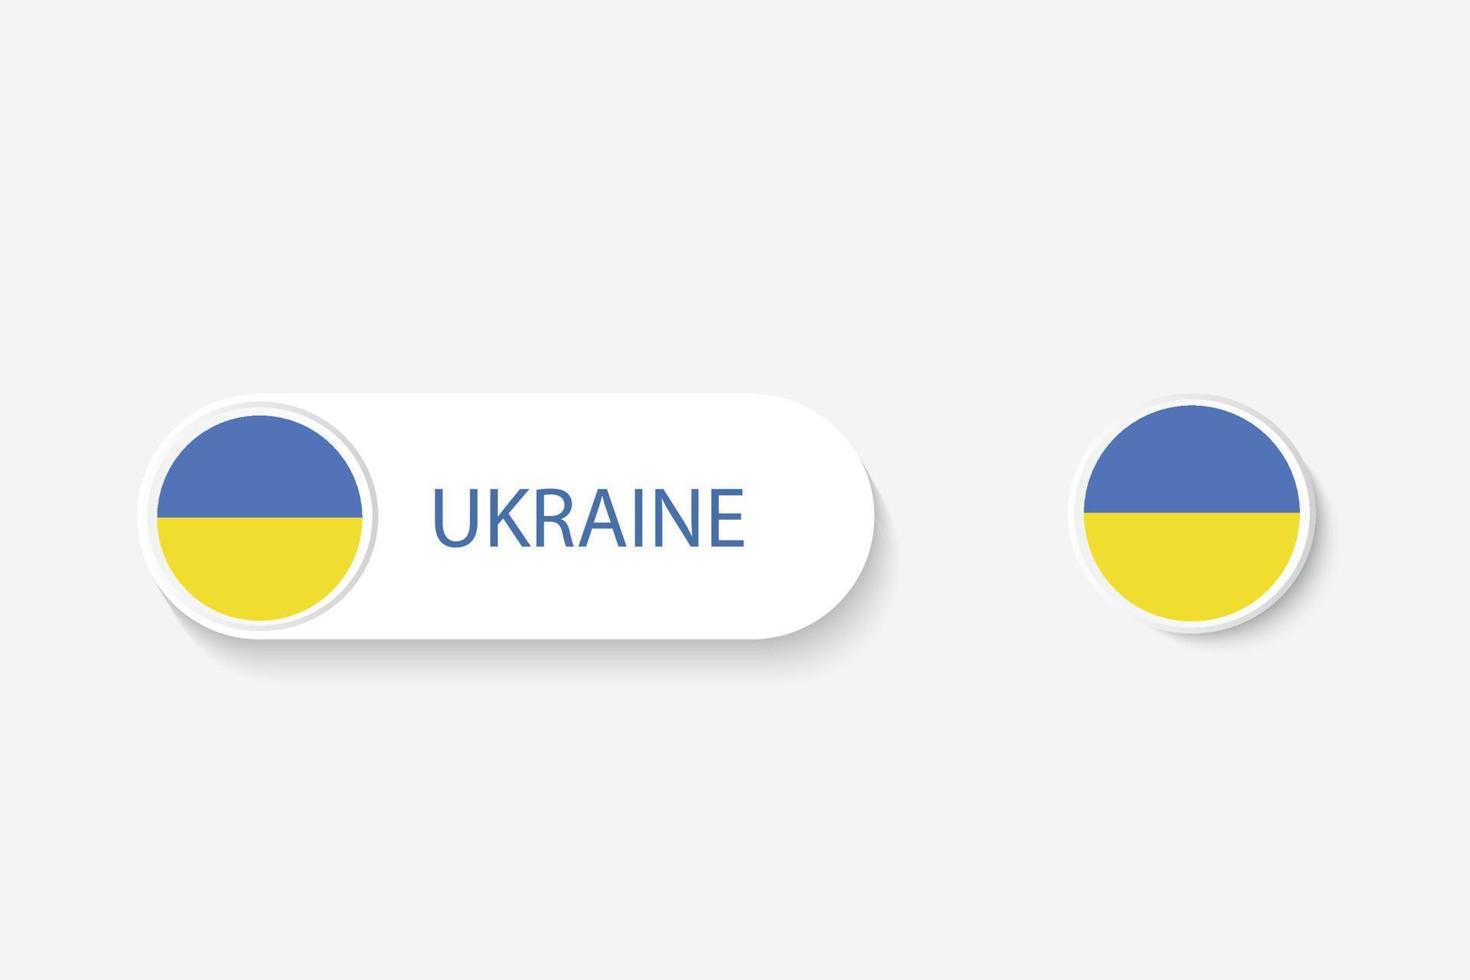 Ukraine button flag in illustration of oval shaped with word of Ukraine. And button flag Ukraine. vector